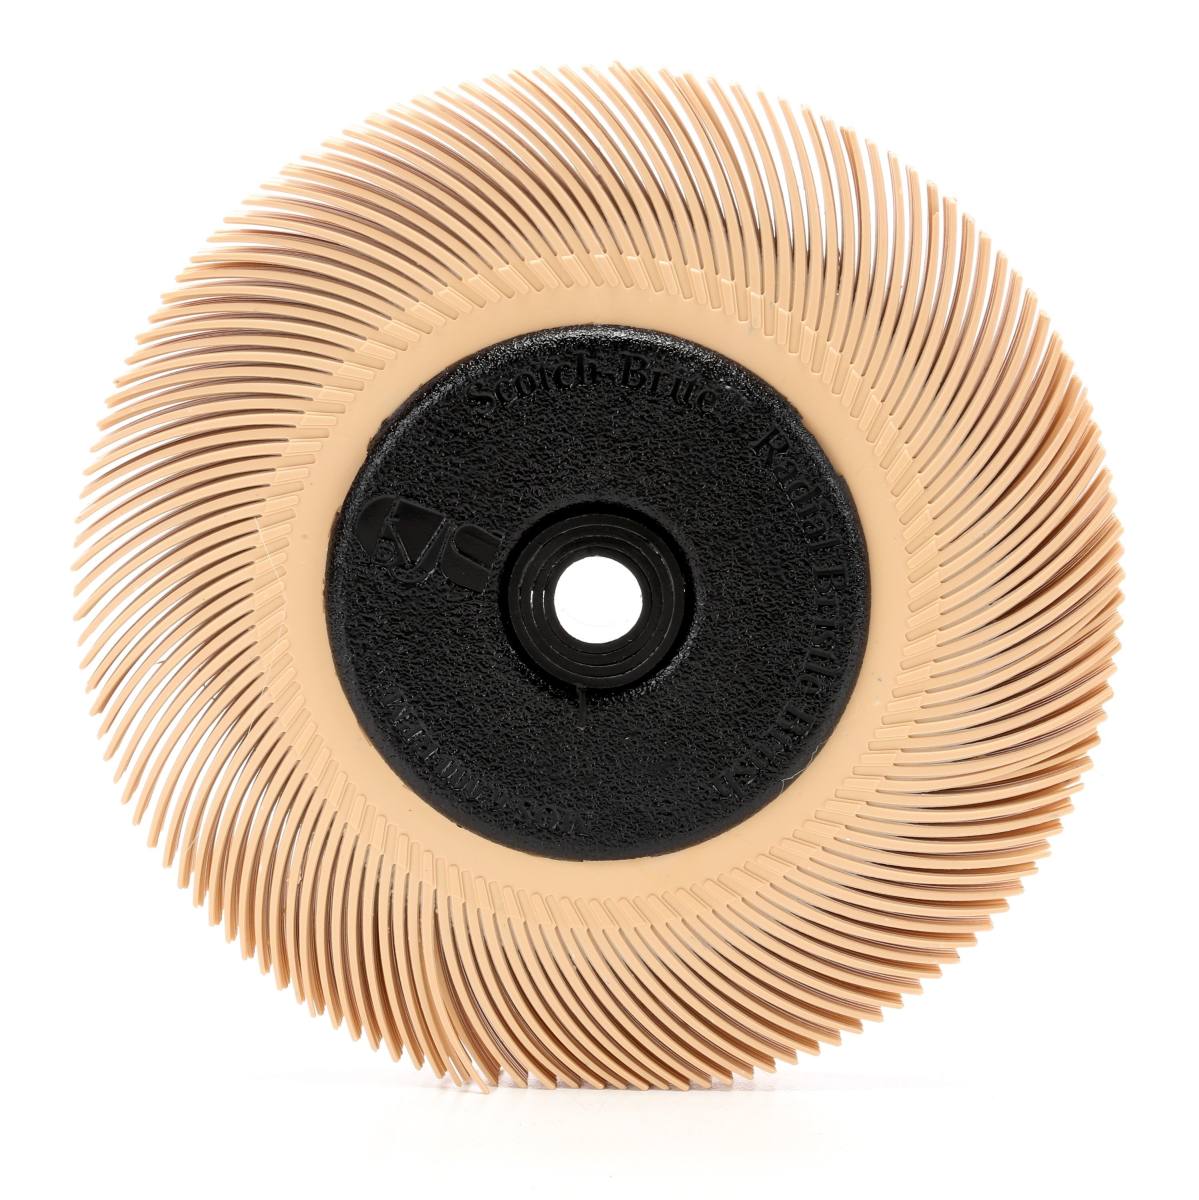 3M Scotch-Brite Radial Bristle Disc BB-ZB with flange, orange, 152.4 mm, 6 microns, type C #33216